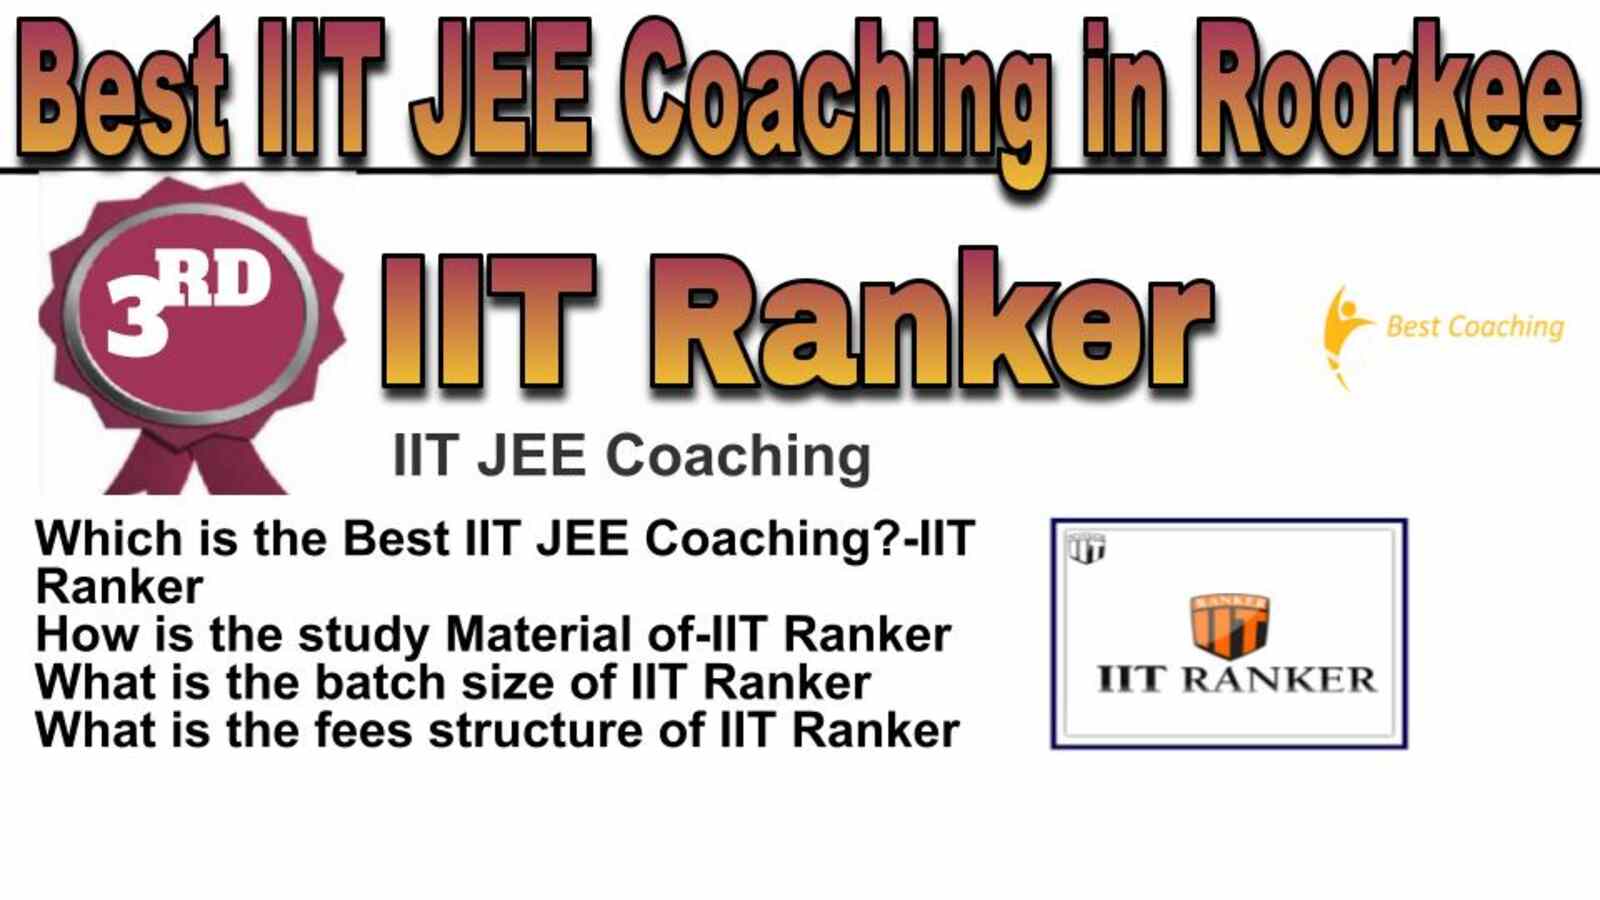 Rank 3 best IIT JEE coaching in Roorkee